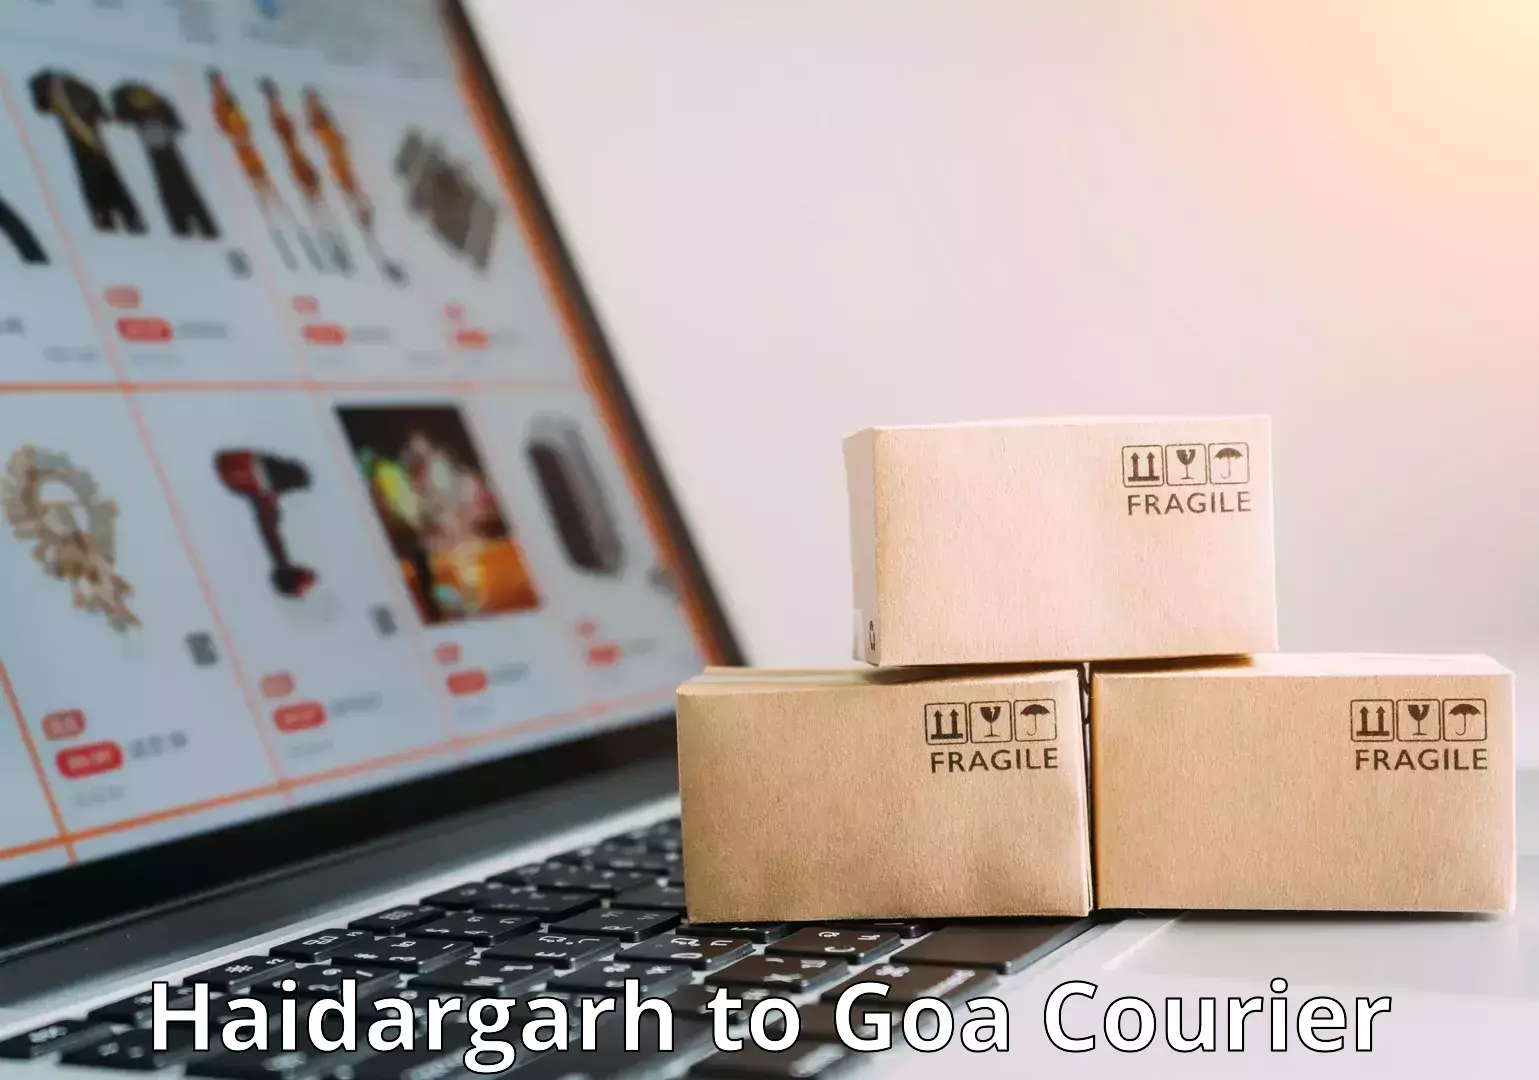 Luggage transport service Haidargarh to Goa